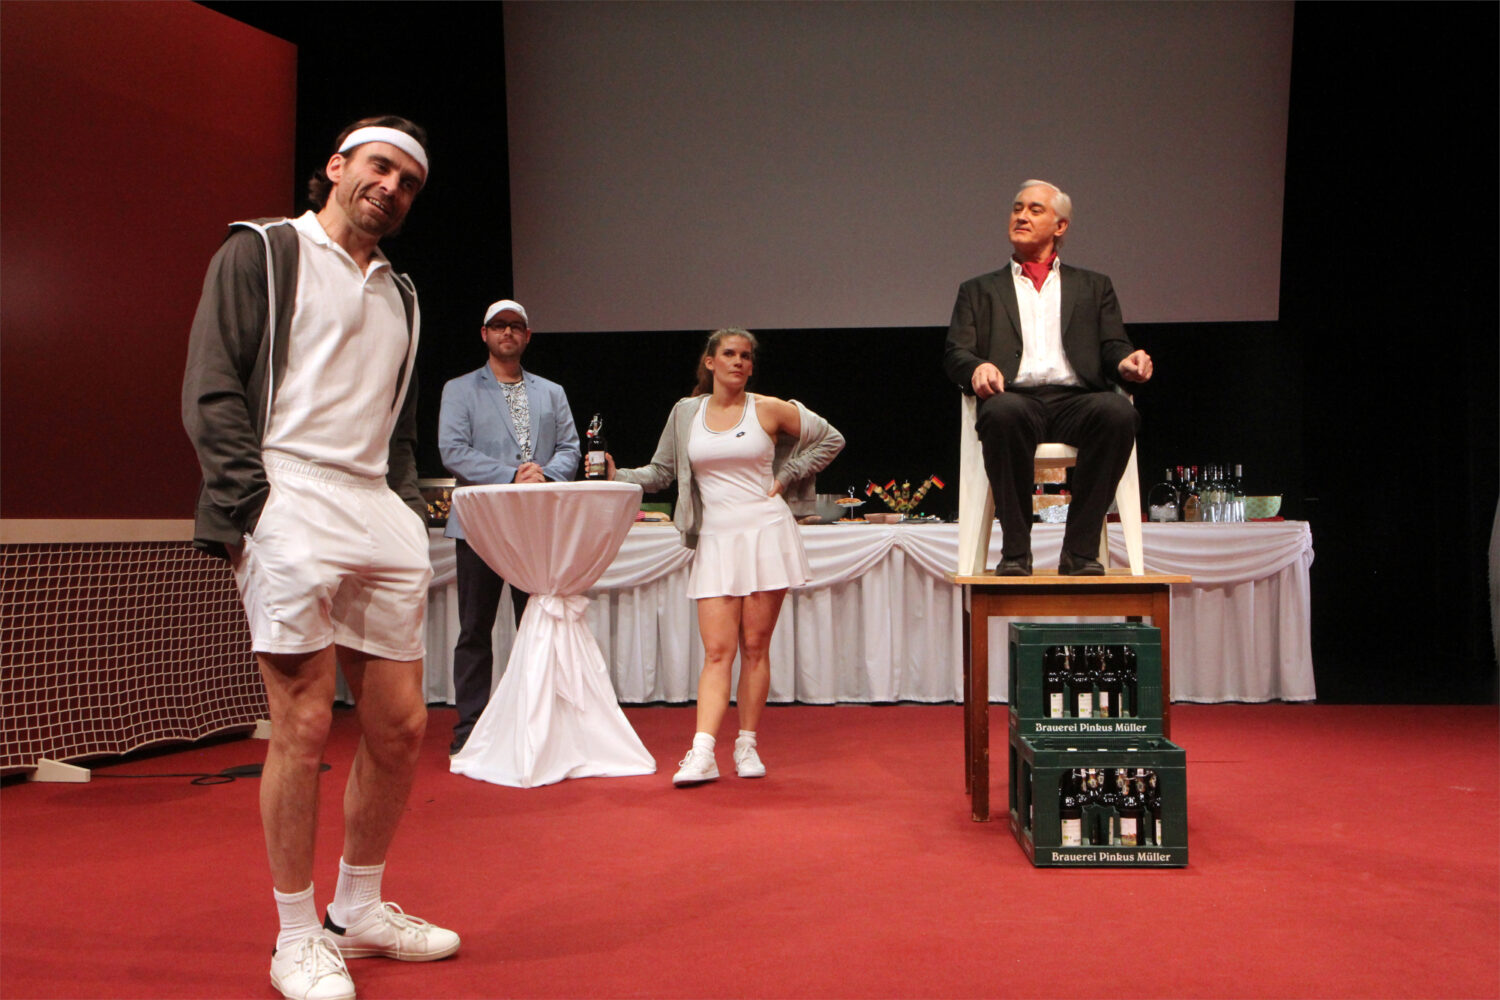 Szenenbild aus "Extrawurst" im Wolfgang-Borchert-Theater